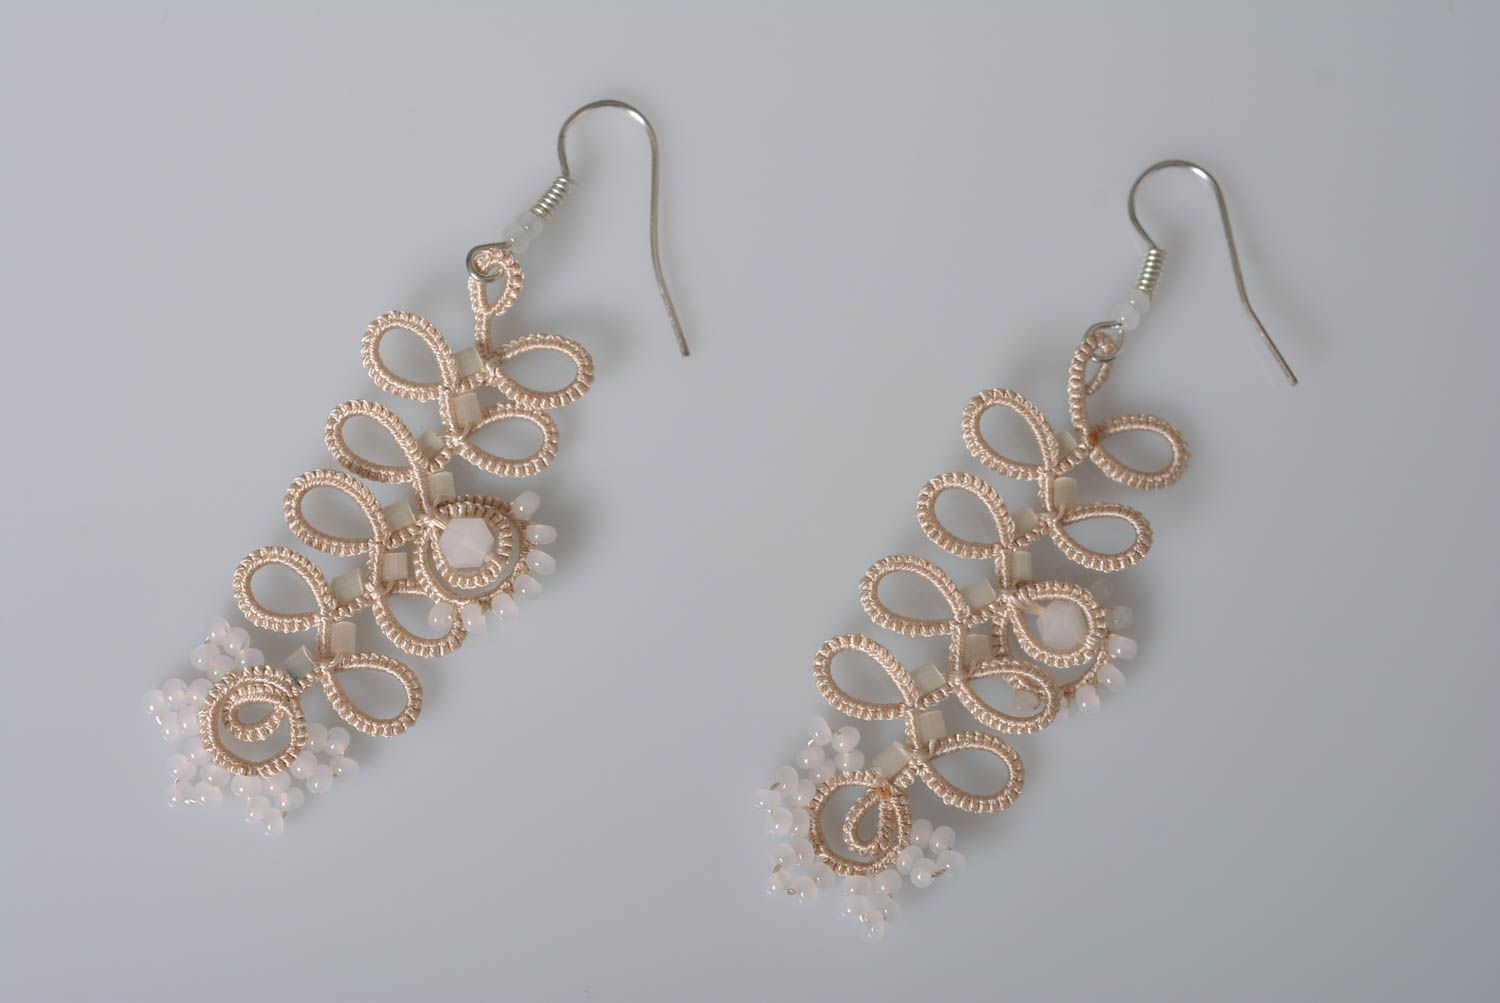 Handmade earrings designer jewelry fashion accessories dangling earrings photo 4